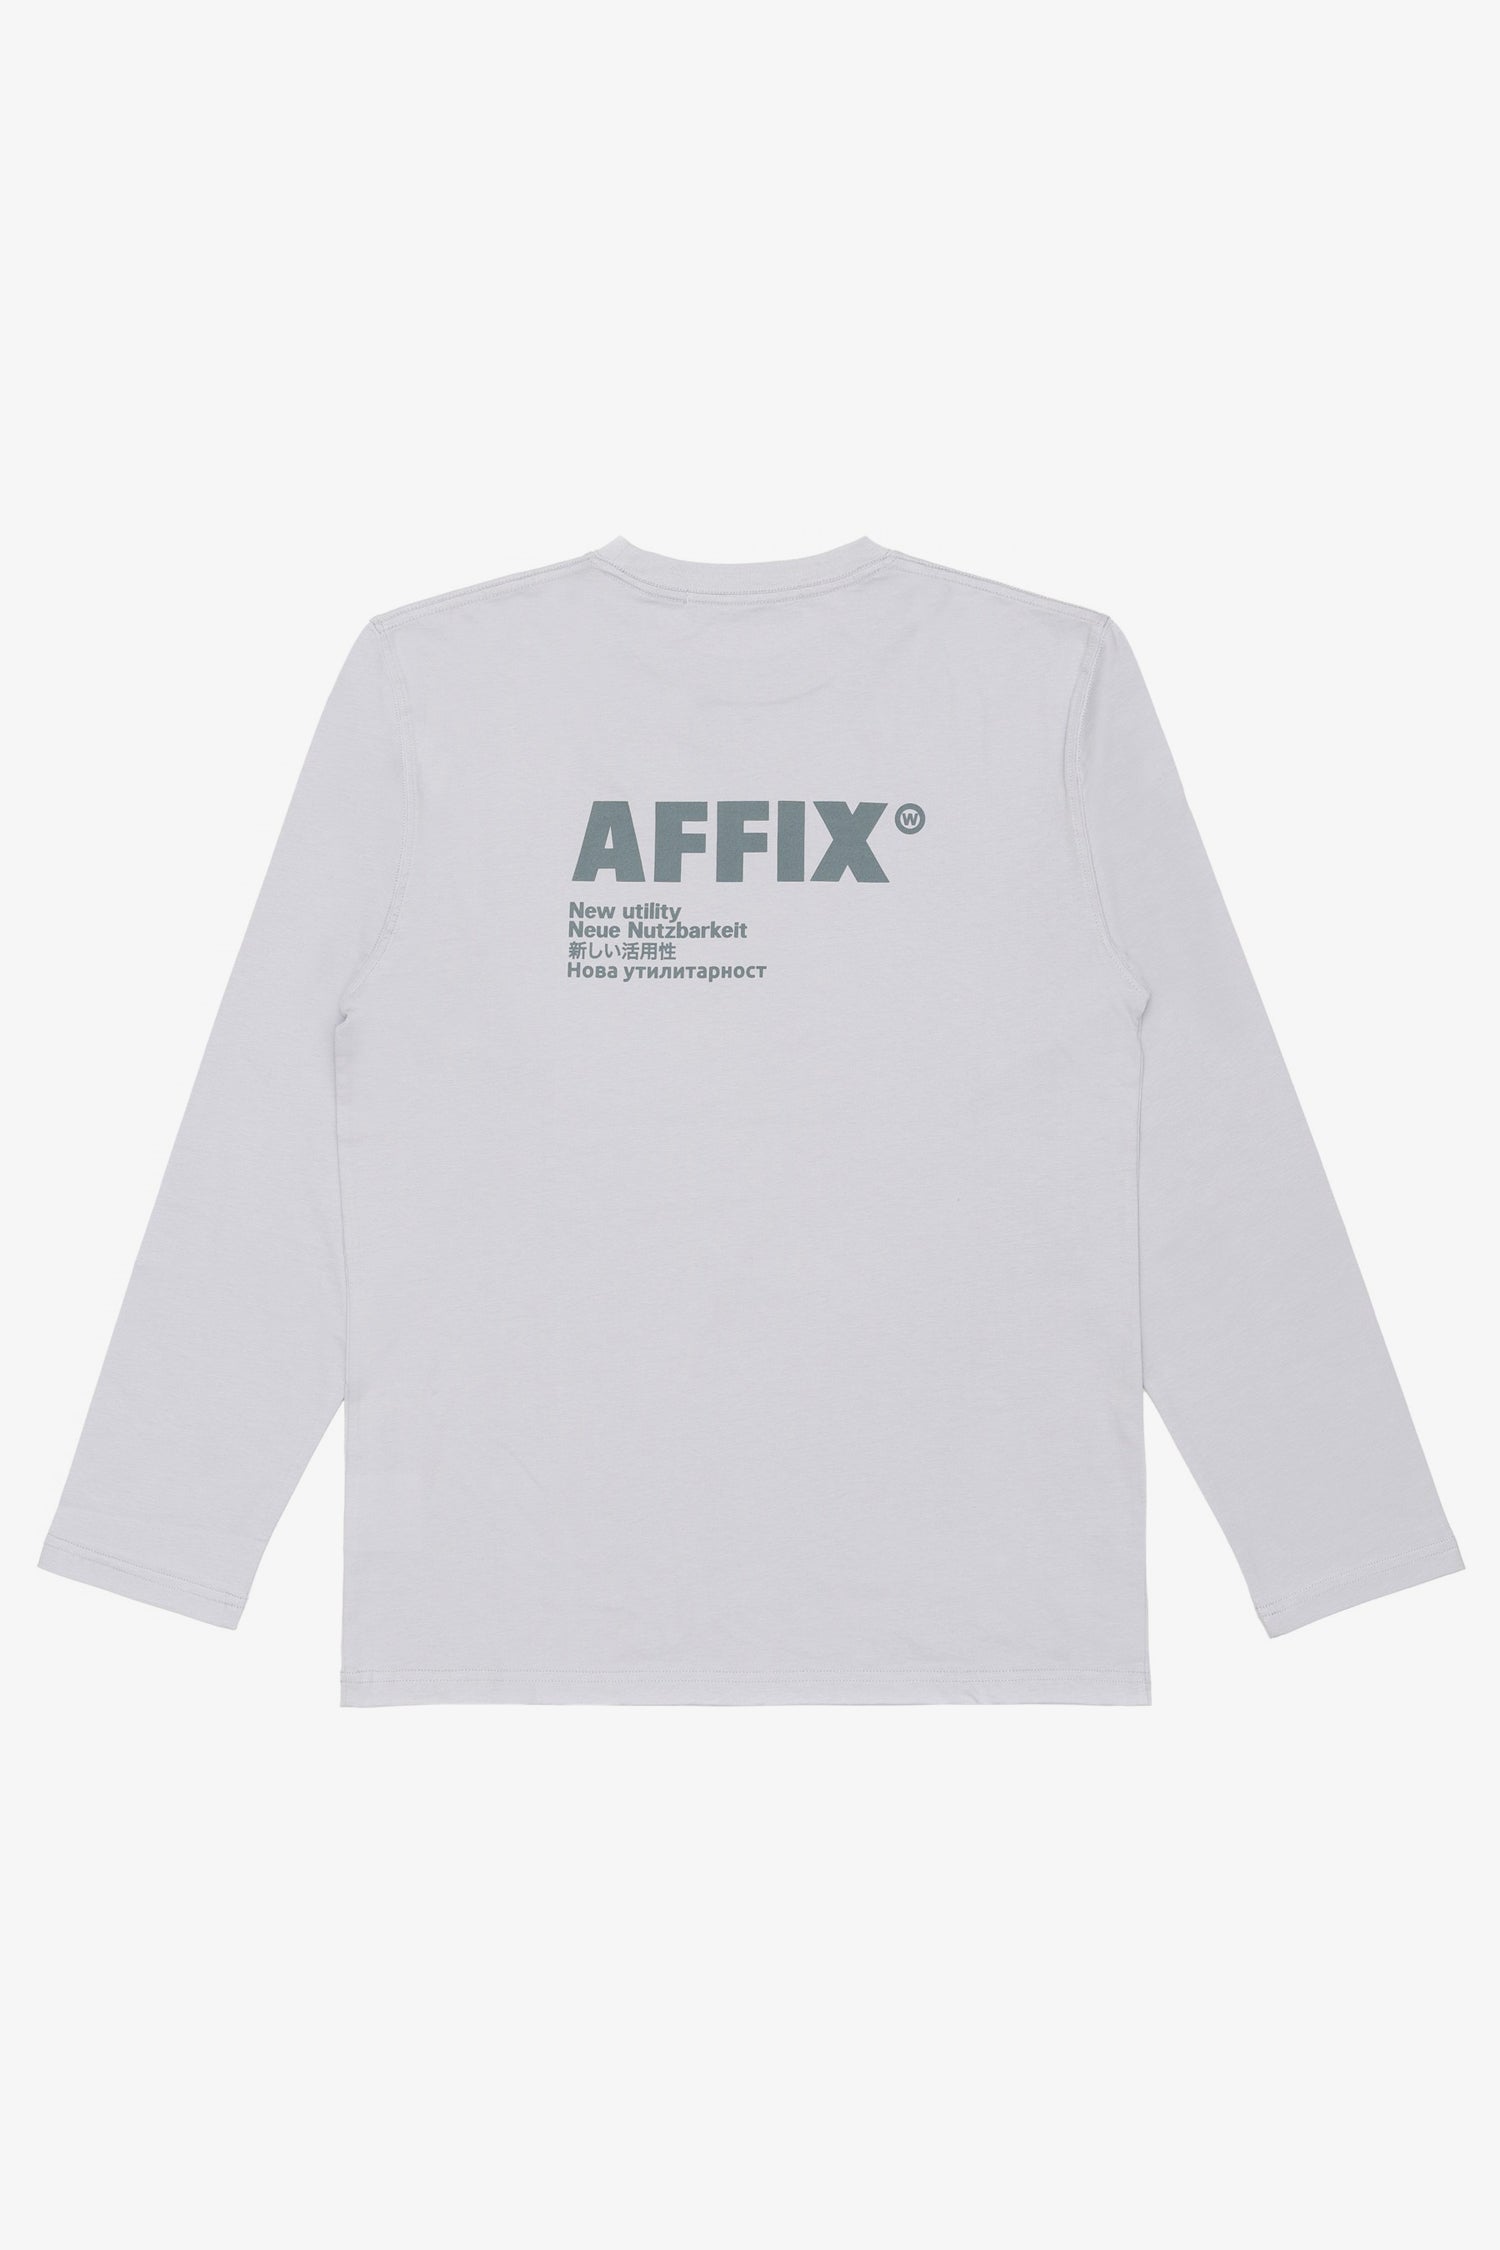 Selectshop FRAME - AFFIX Basic Logo Longsleeve T-Shirt Dubai